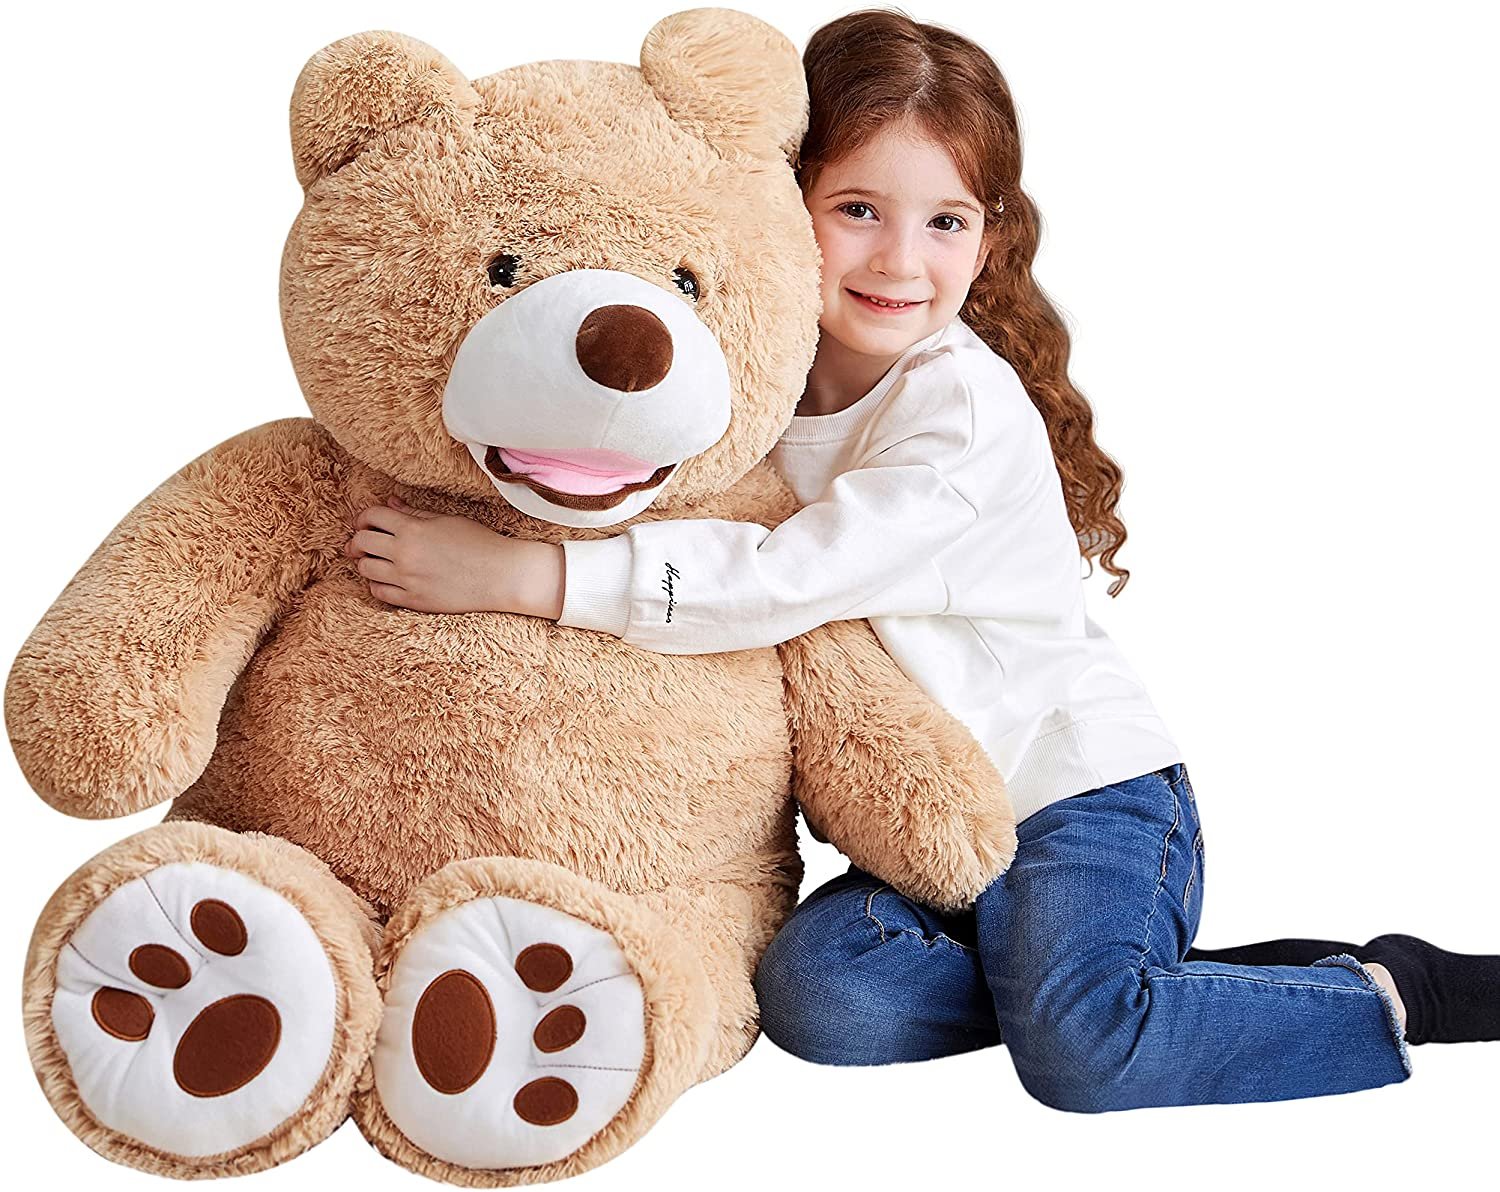 big teddy bear for kids